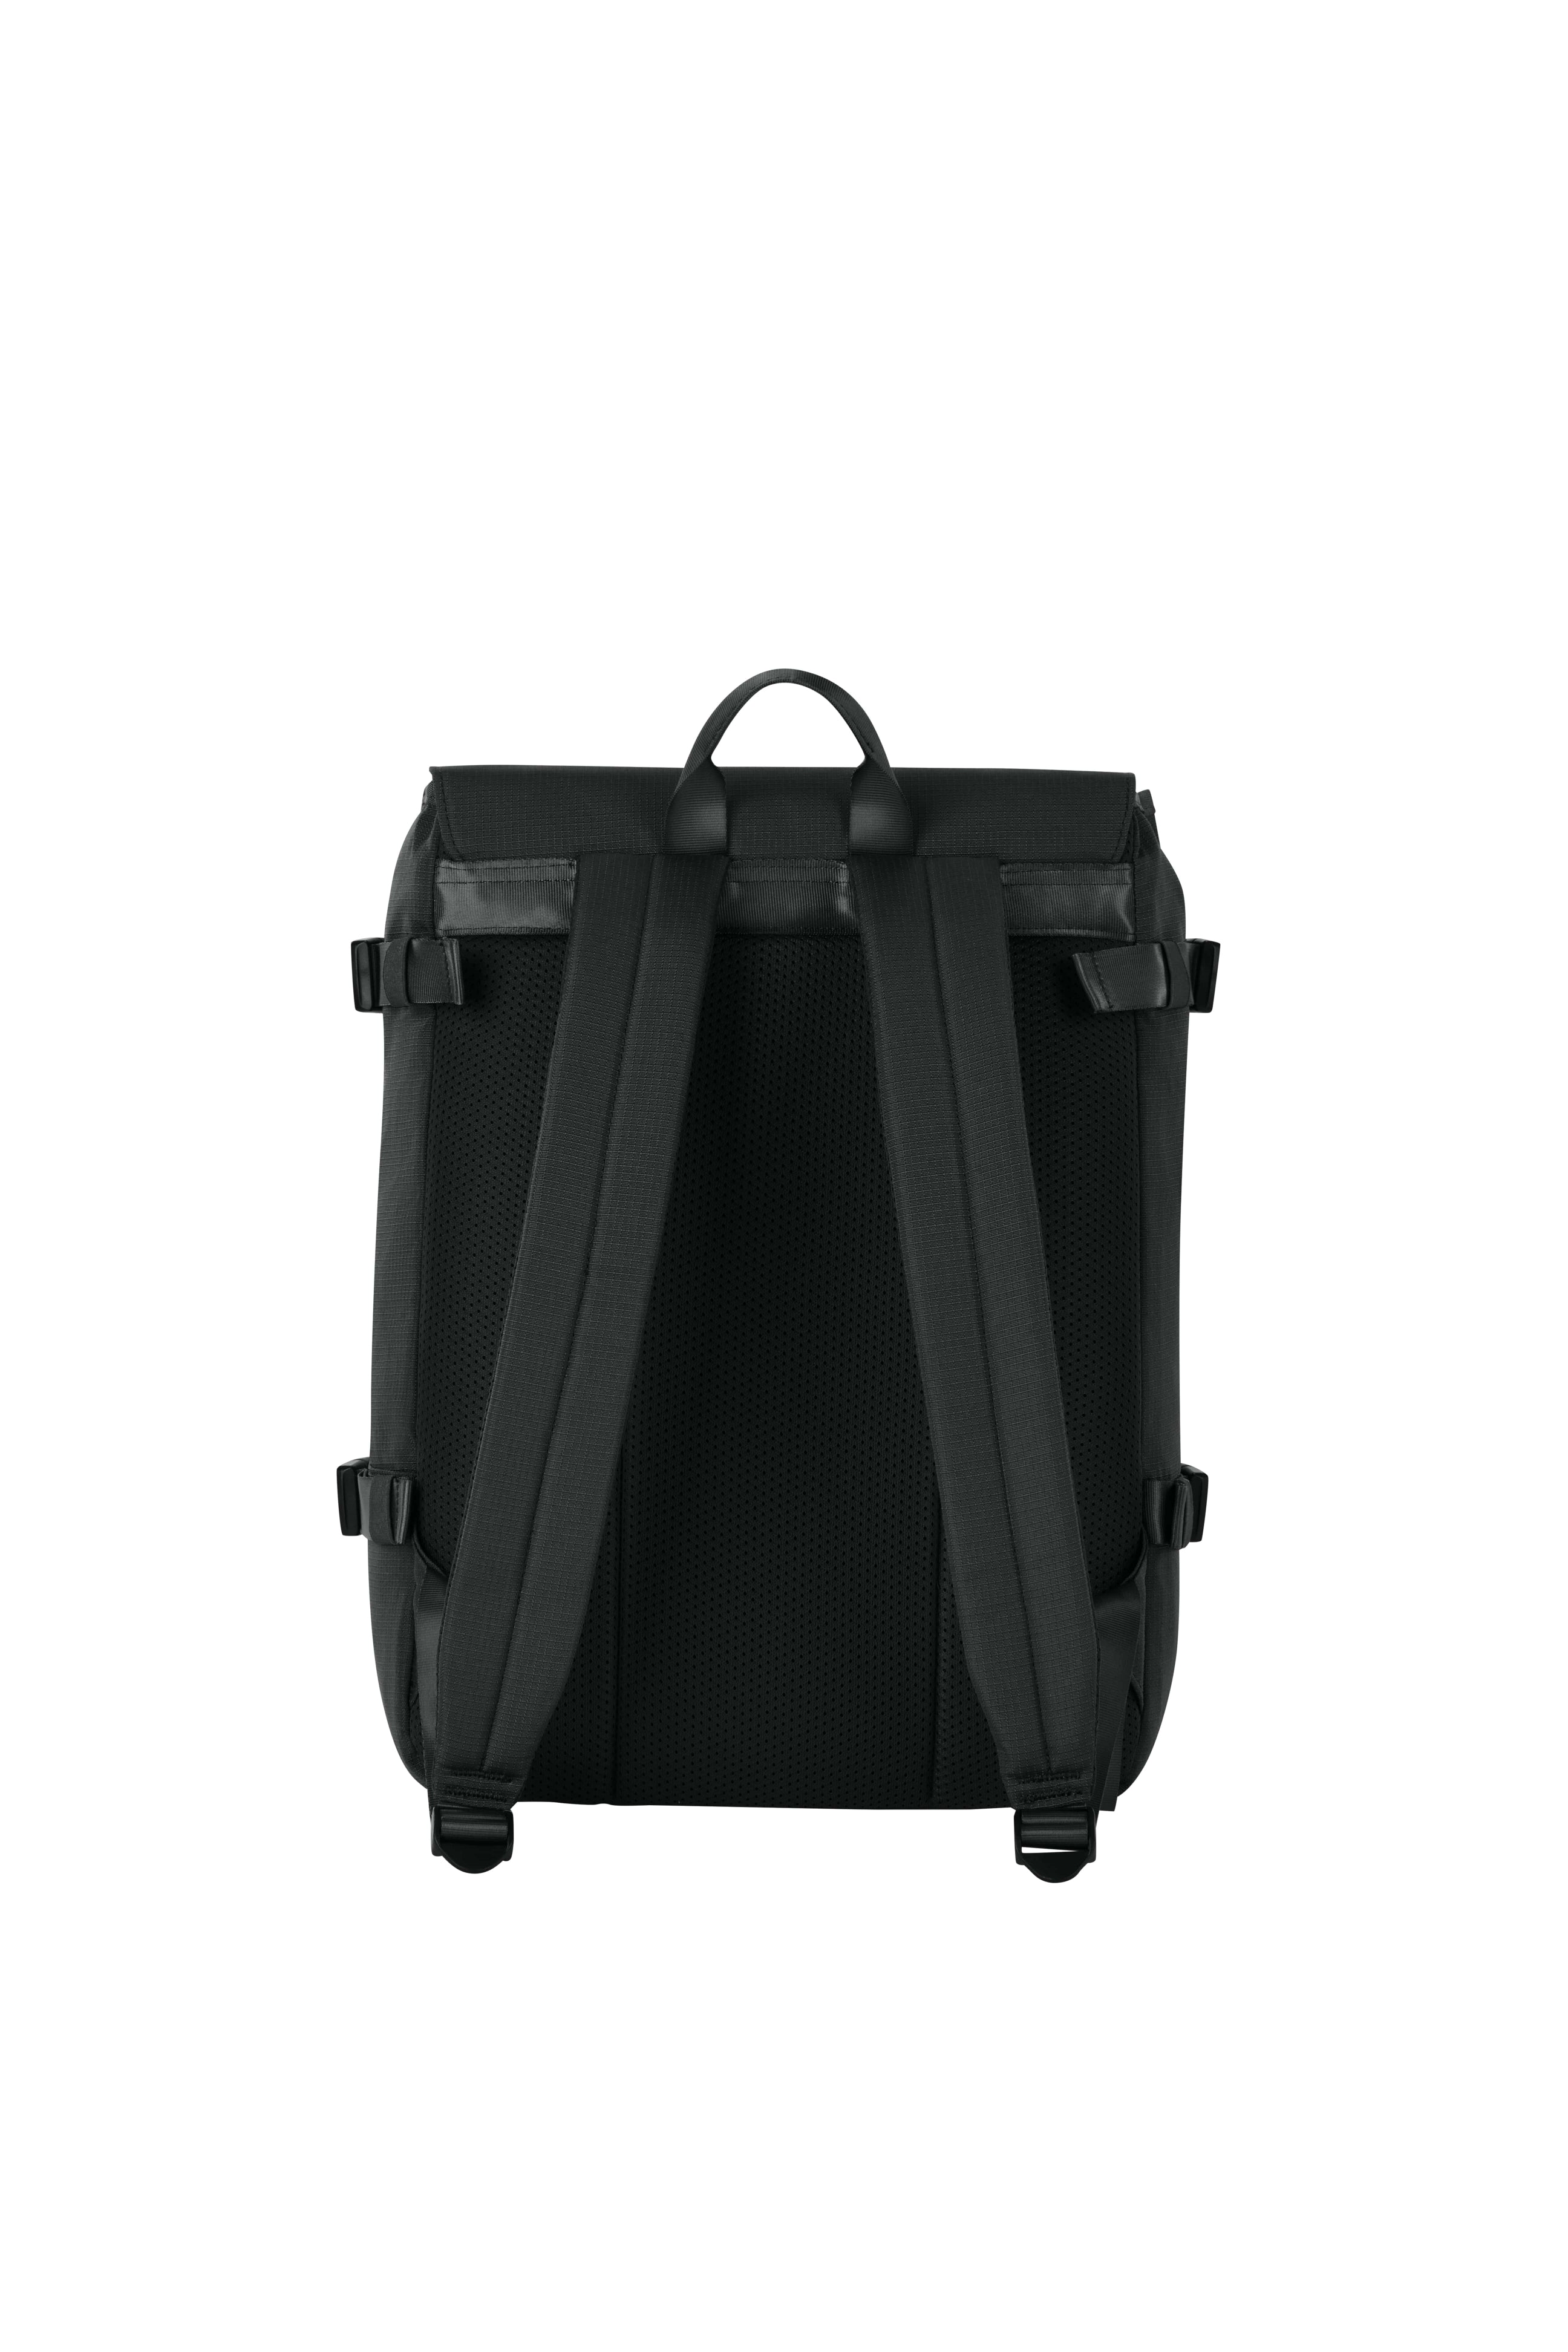 High Sierra - Camille 20L 15.6in Laptop backpack - Black-4